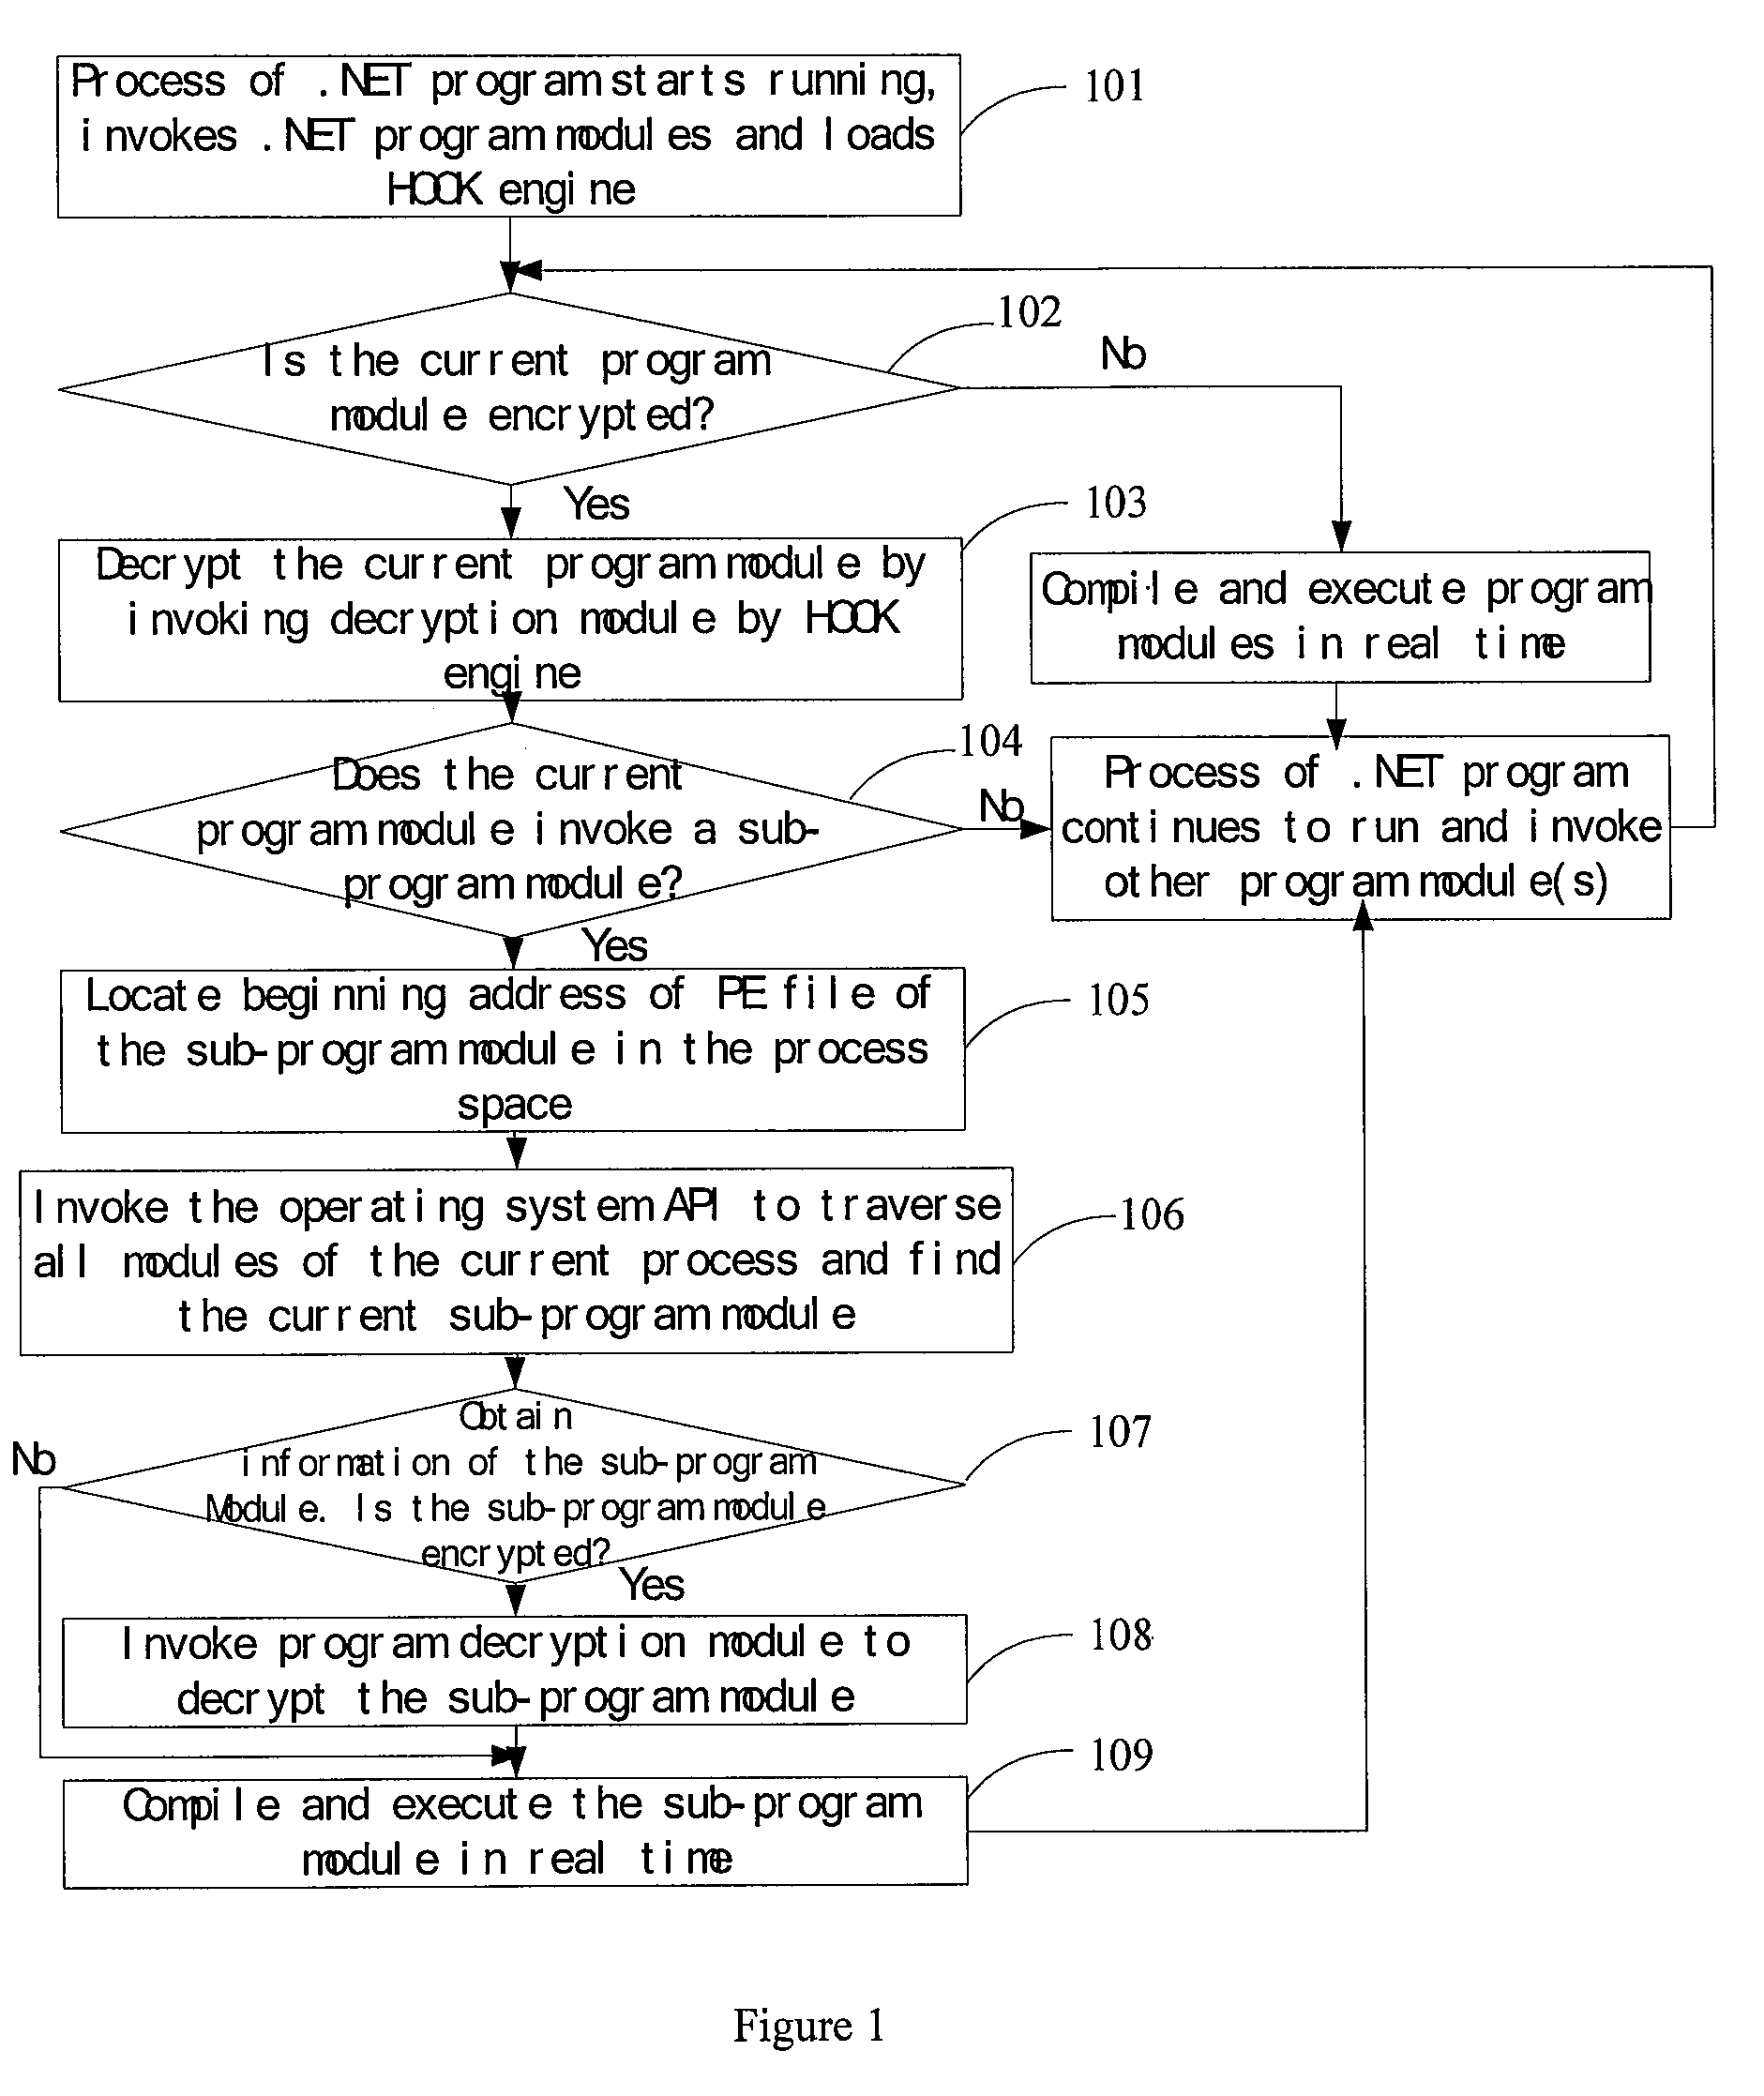 Execution method of .NET program after encryption